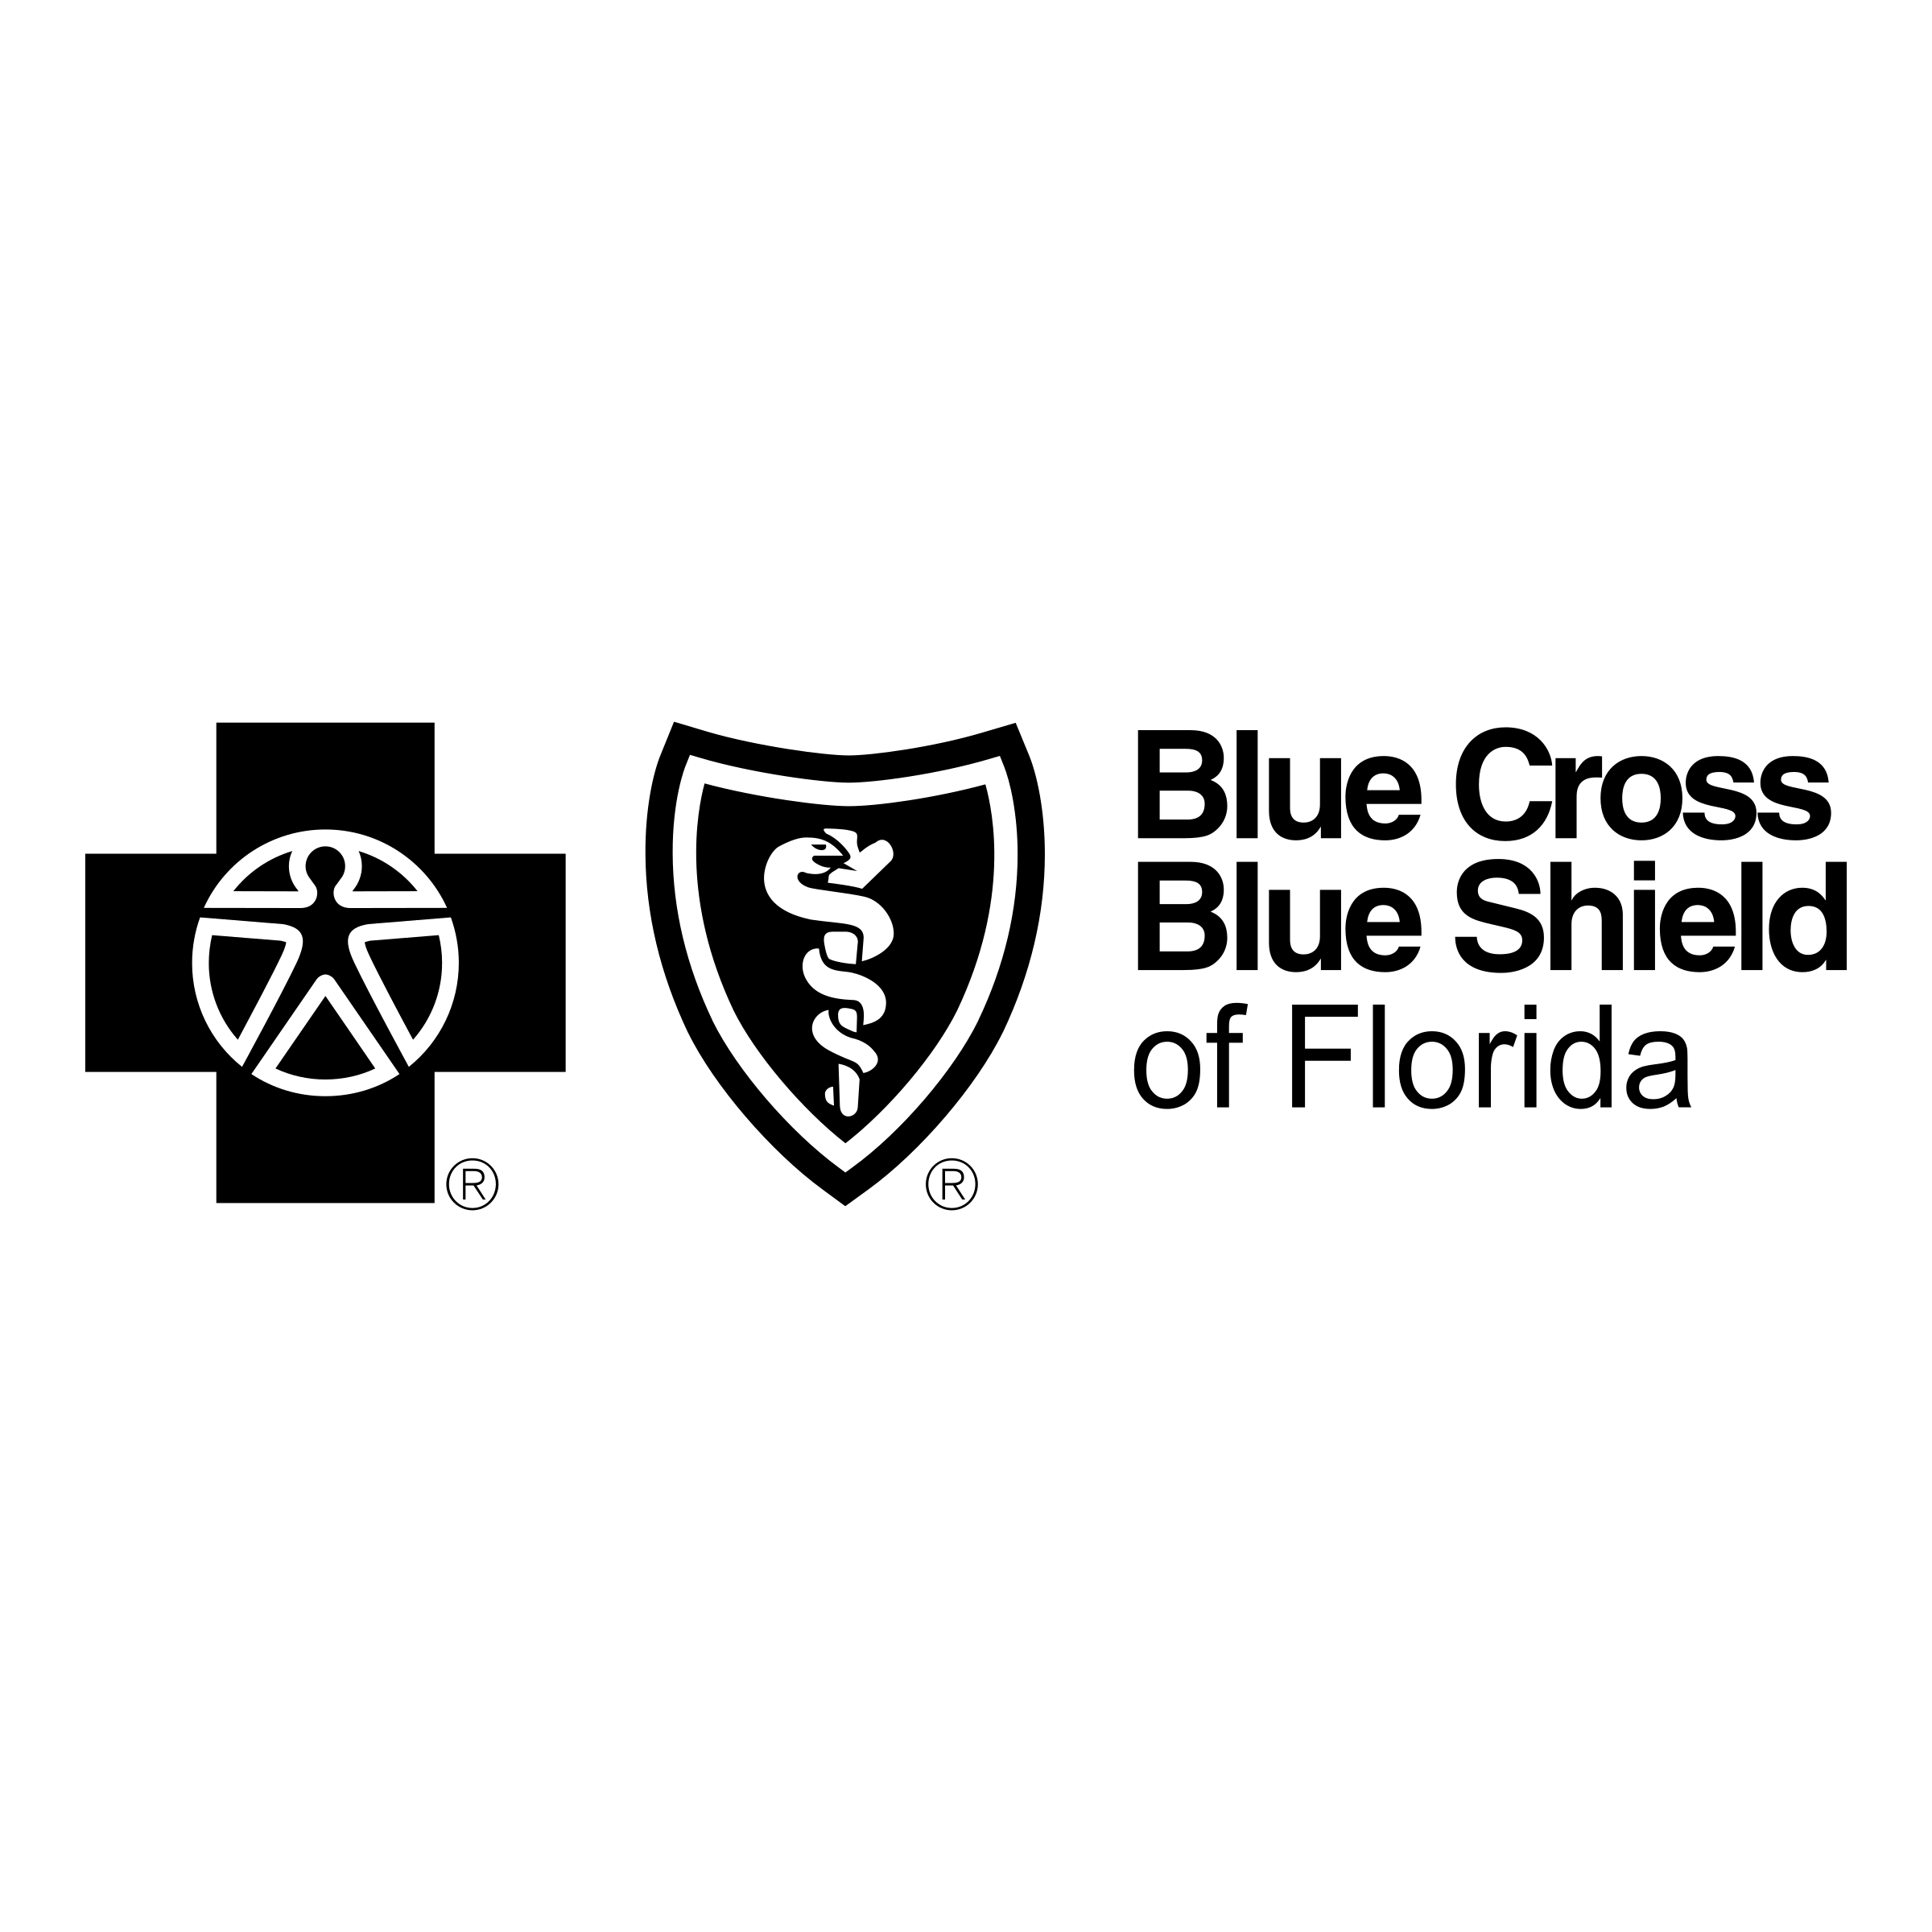 White and Blue Shield Logo - Blue Cross Blue Shield of Florida Logo PNG Transparent & SVG Vector